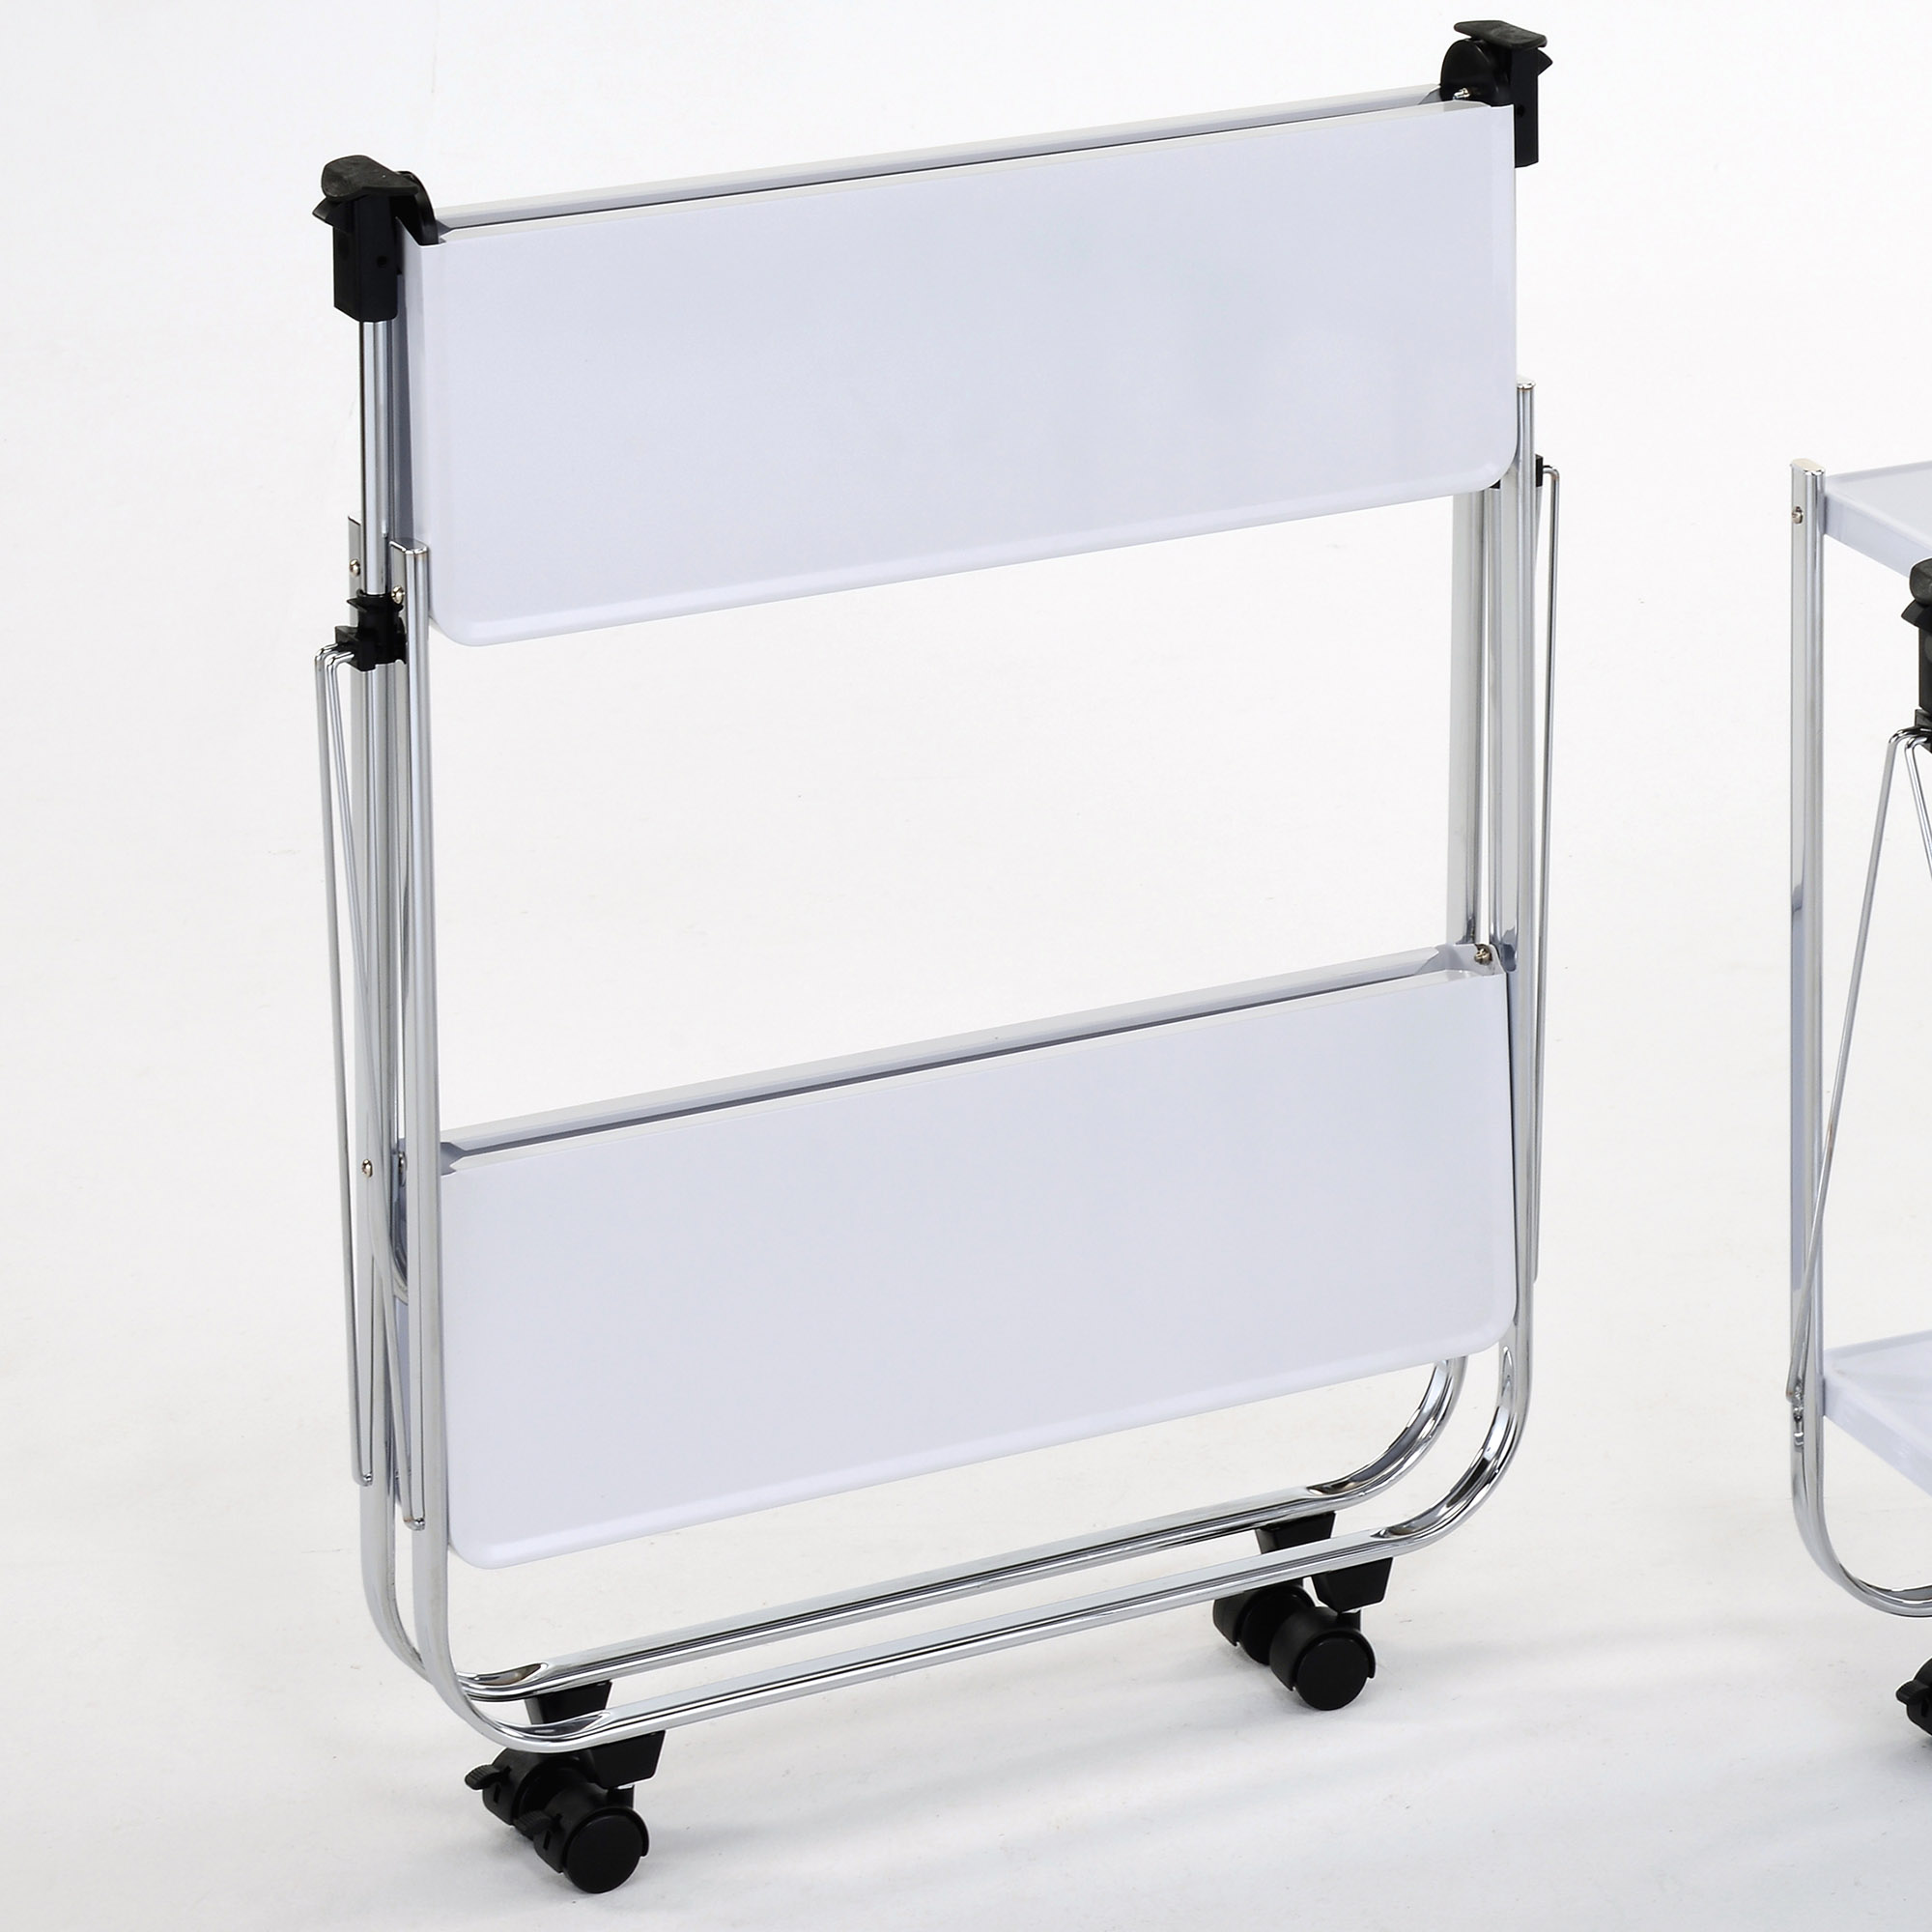 Sumi-2-Tier Folding Bar Cart-White